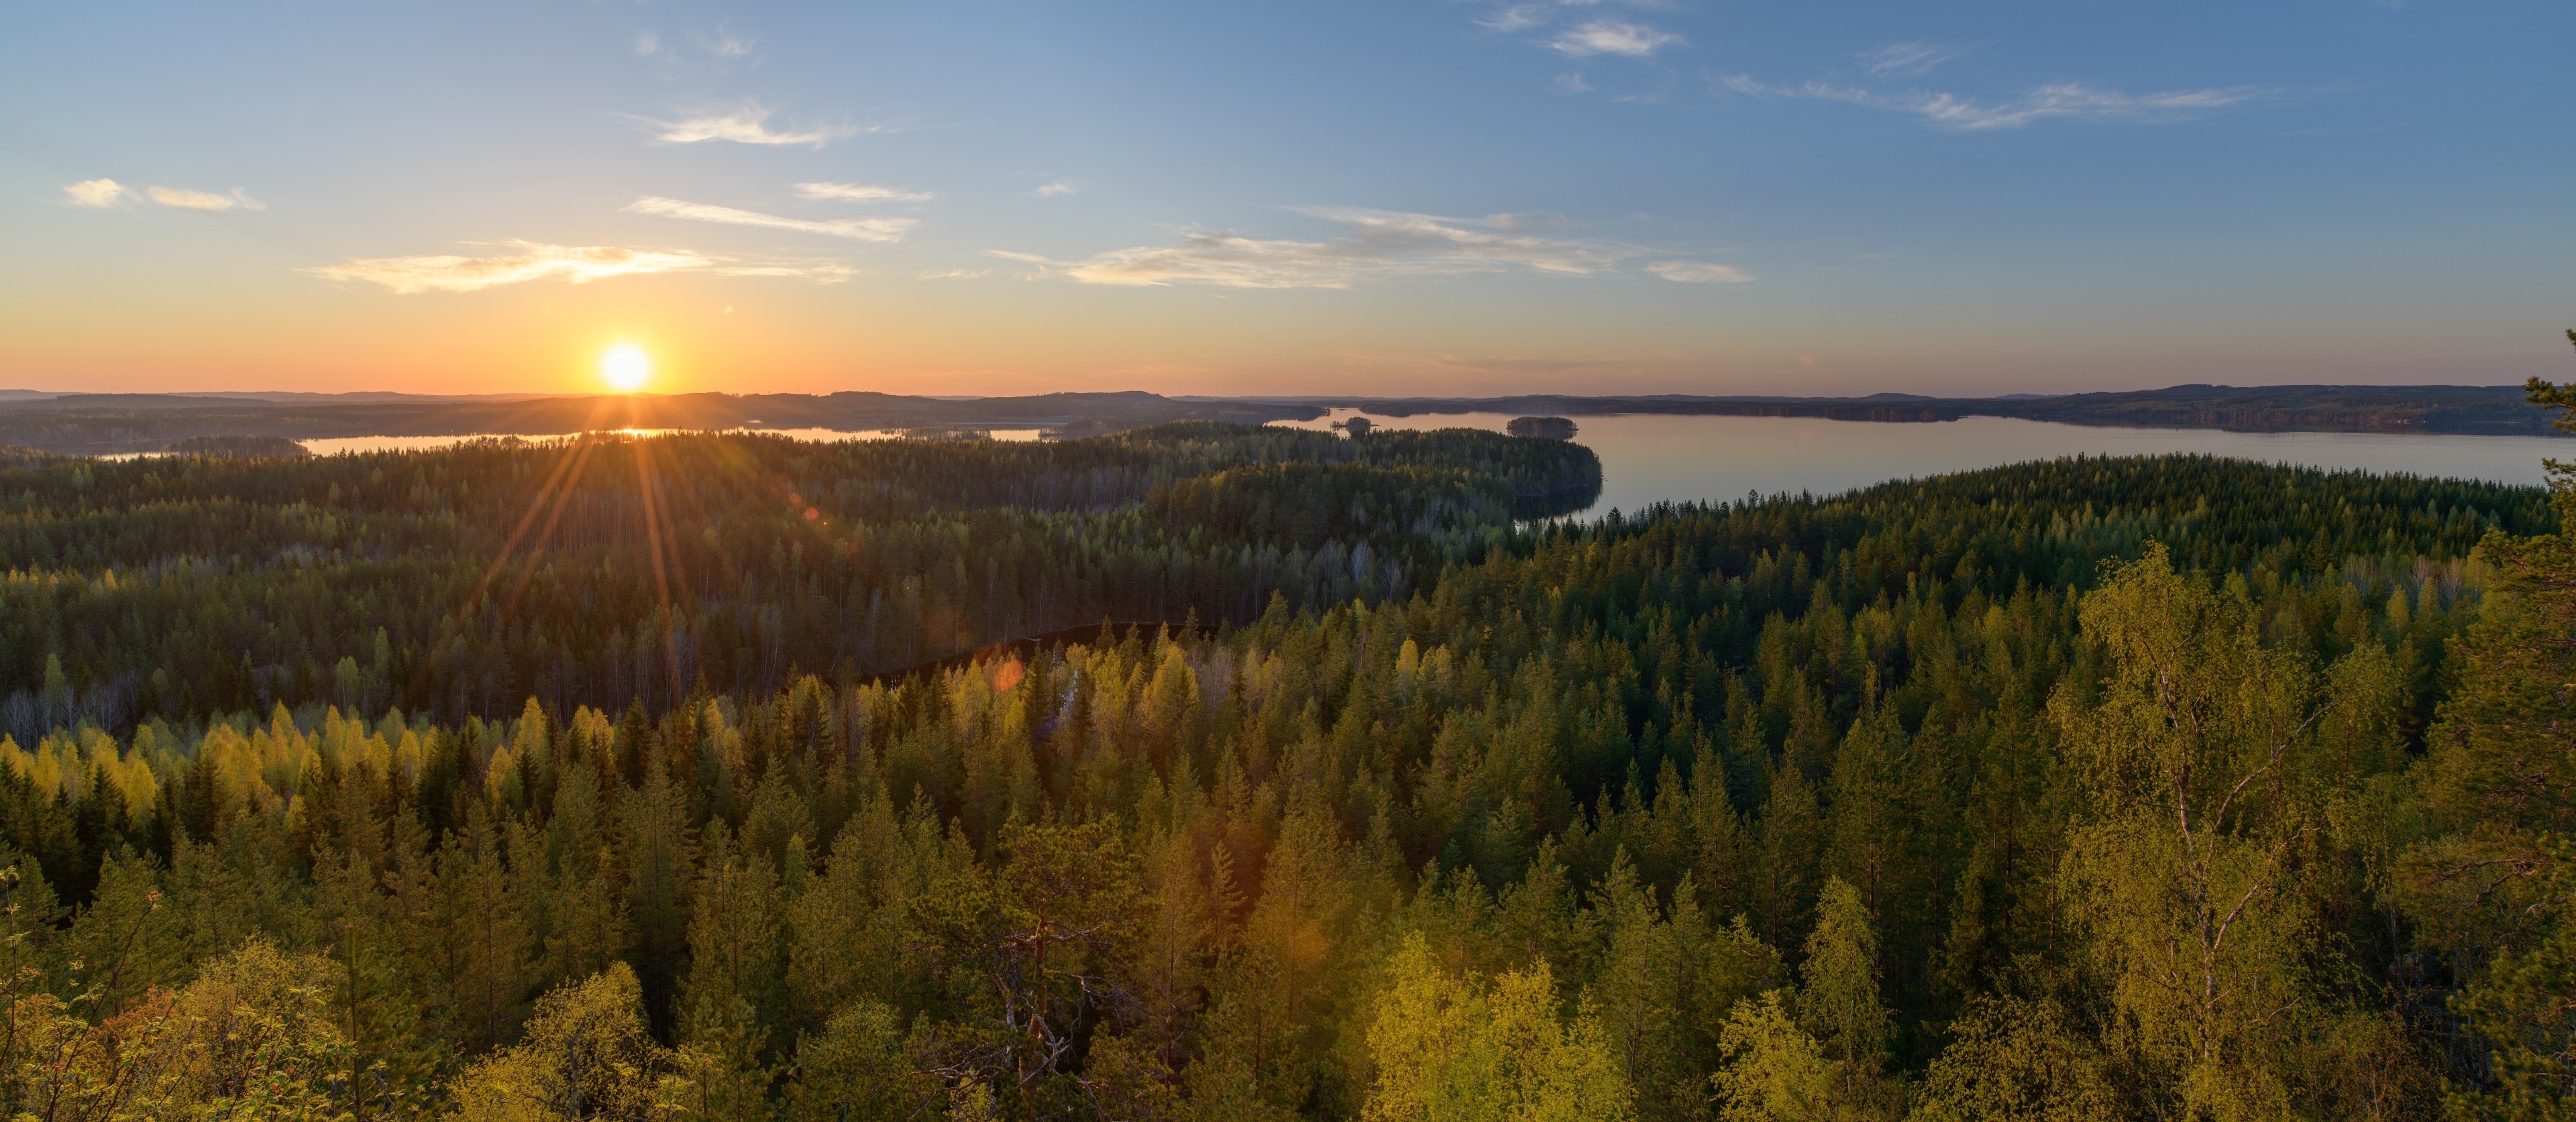 Centraal-Finland, Finland